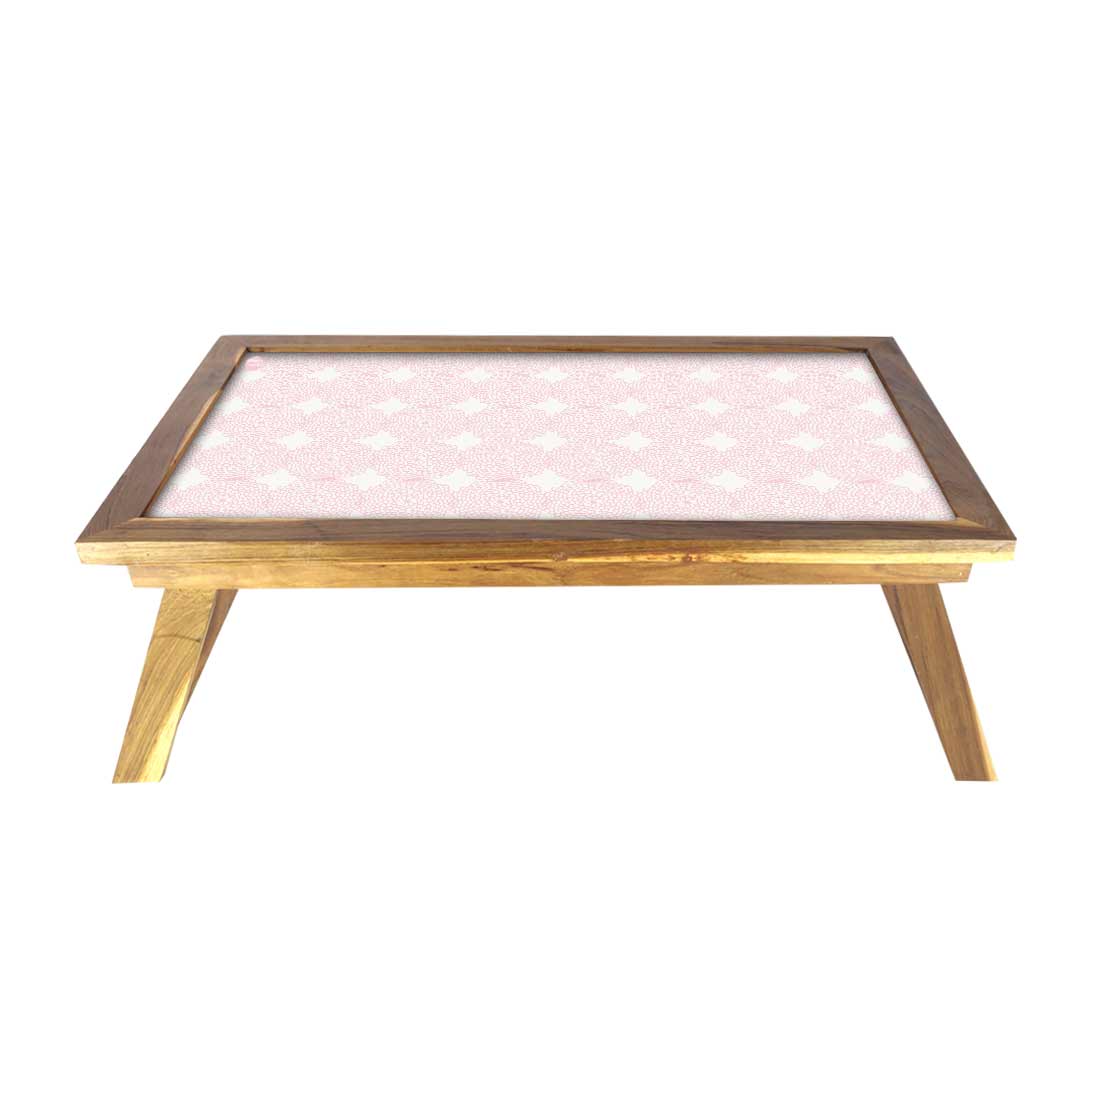 Nutcase Folding Laptop Table For Home Bed Lapdesk Breakfast Table Foldable Teak Wooden Study Desk - Beautiful Pink Flower Nutcase